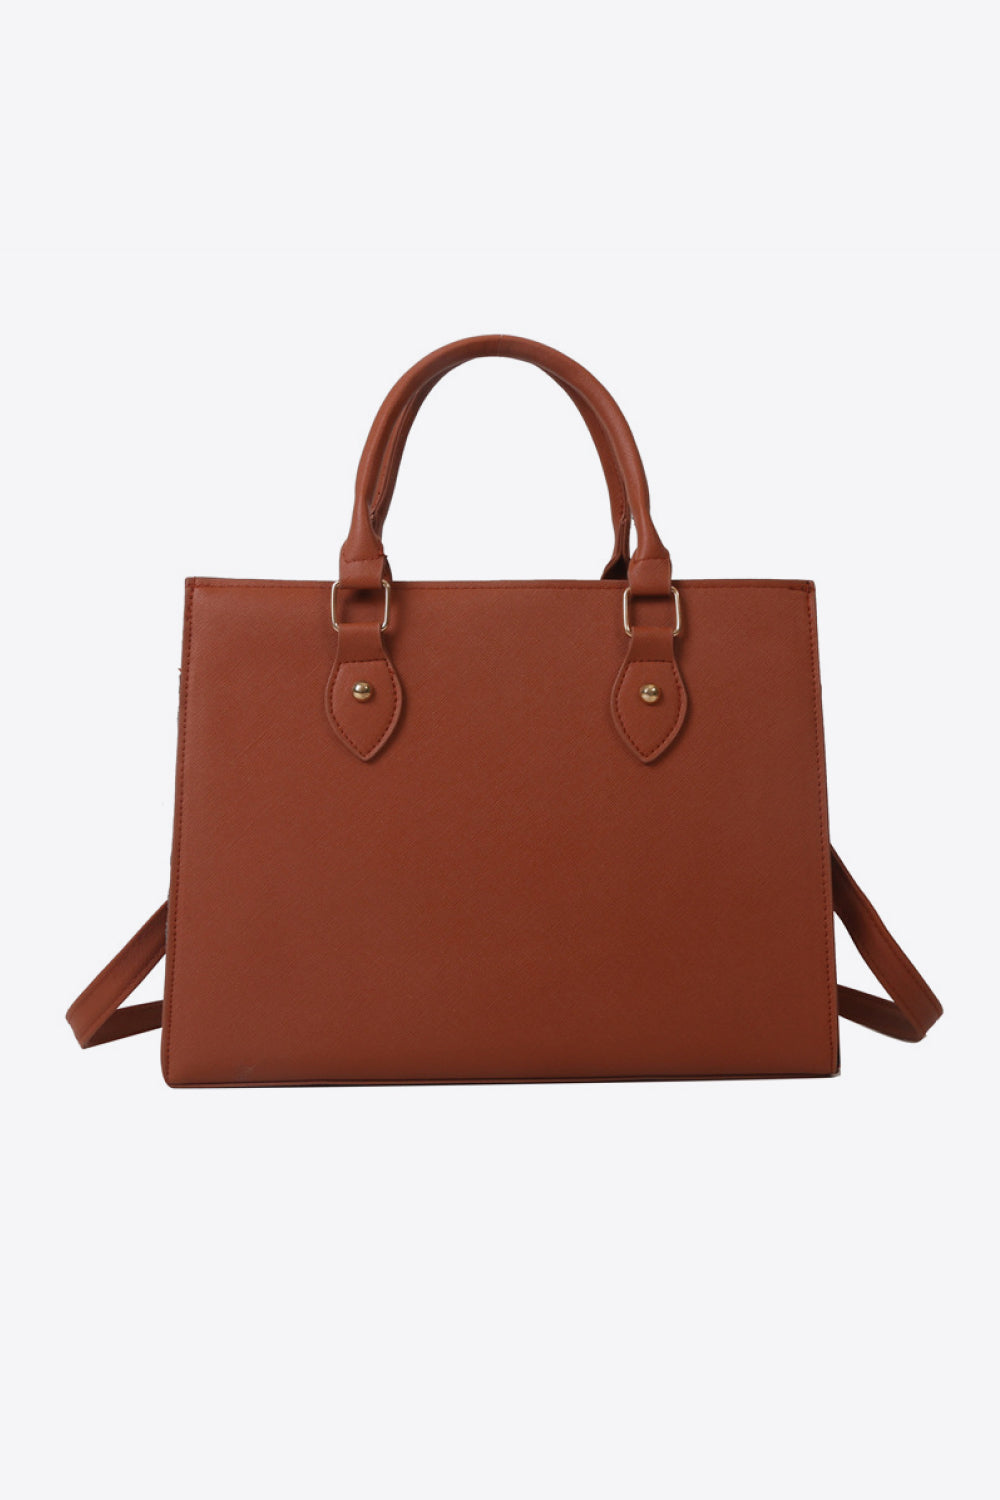 Oak Grove Vegan Leather Handbag | Hypoallergenic - Allergy Friendly - Naturally Free